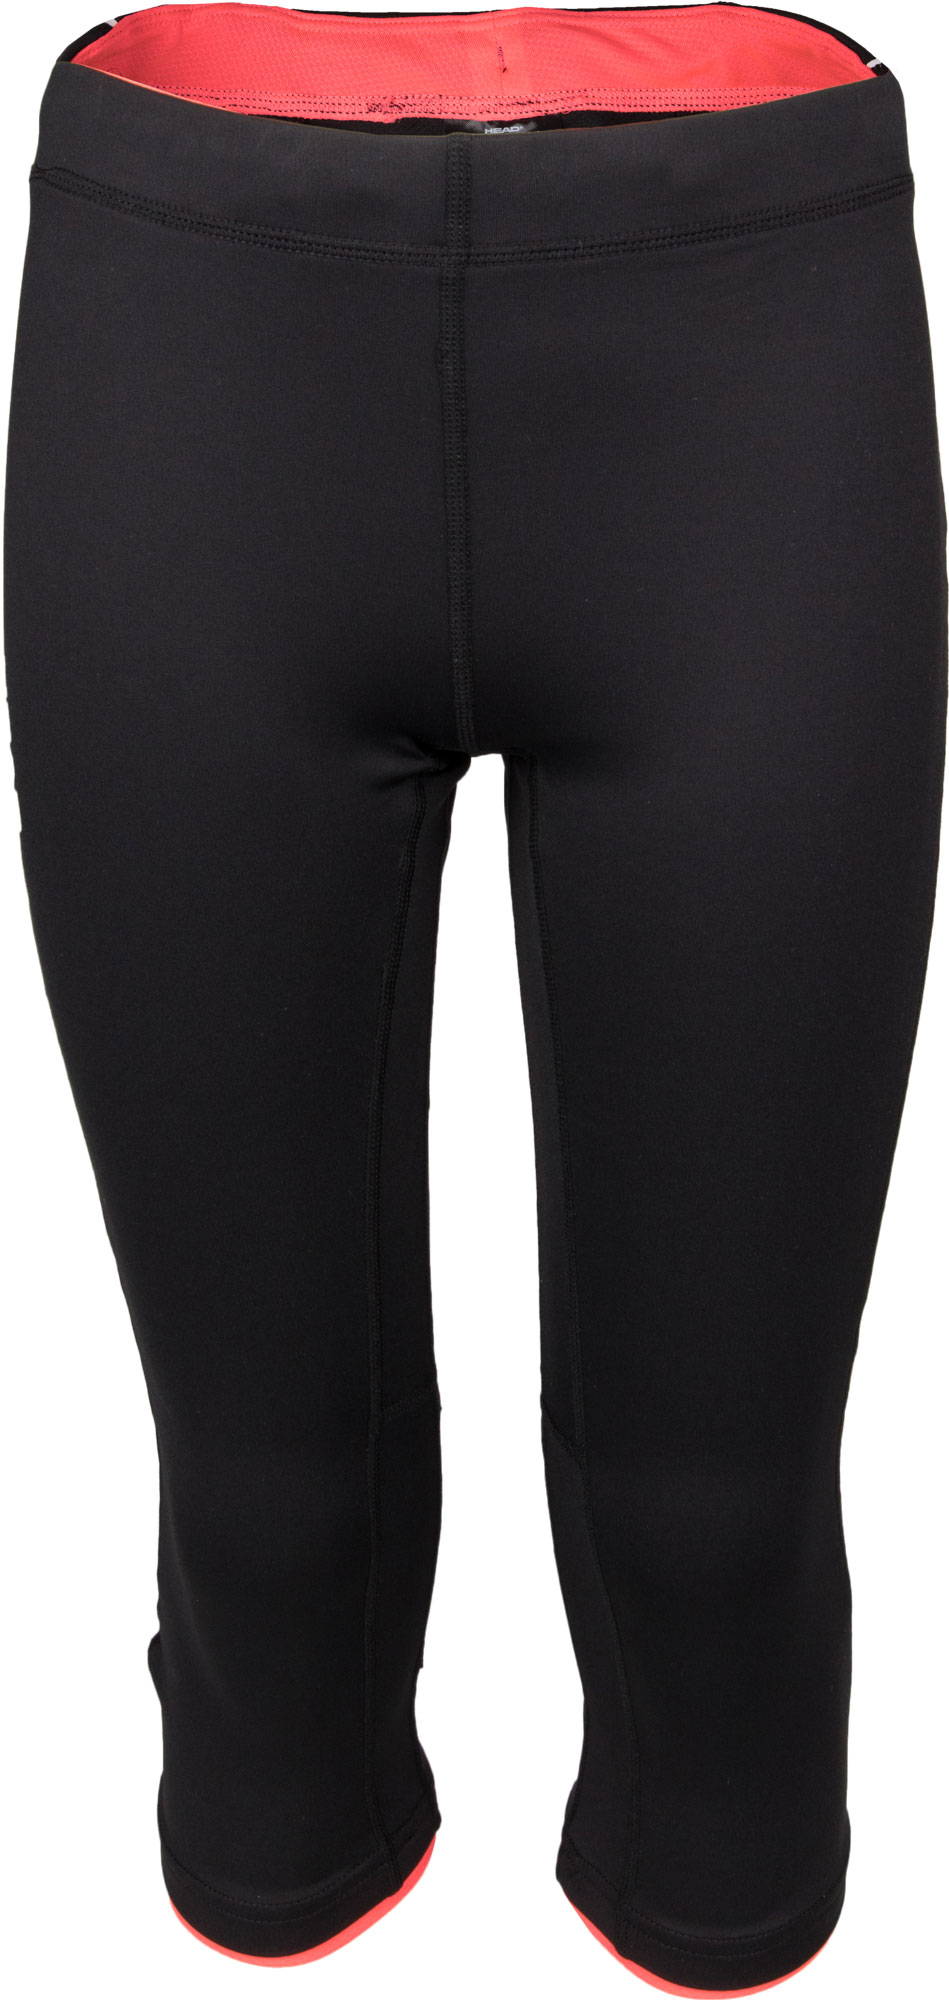 Girls’ 3/4 length functional pants